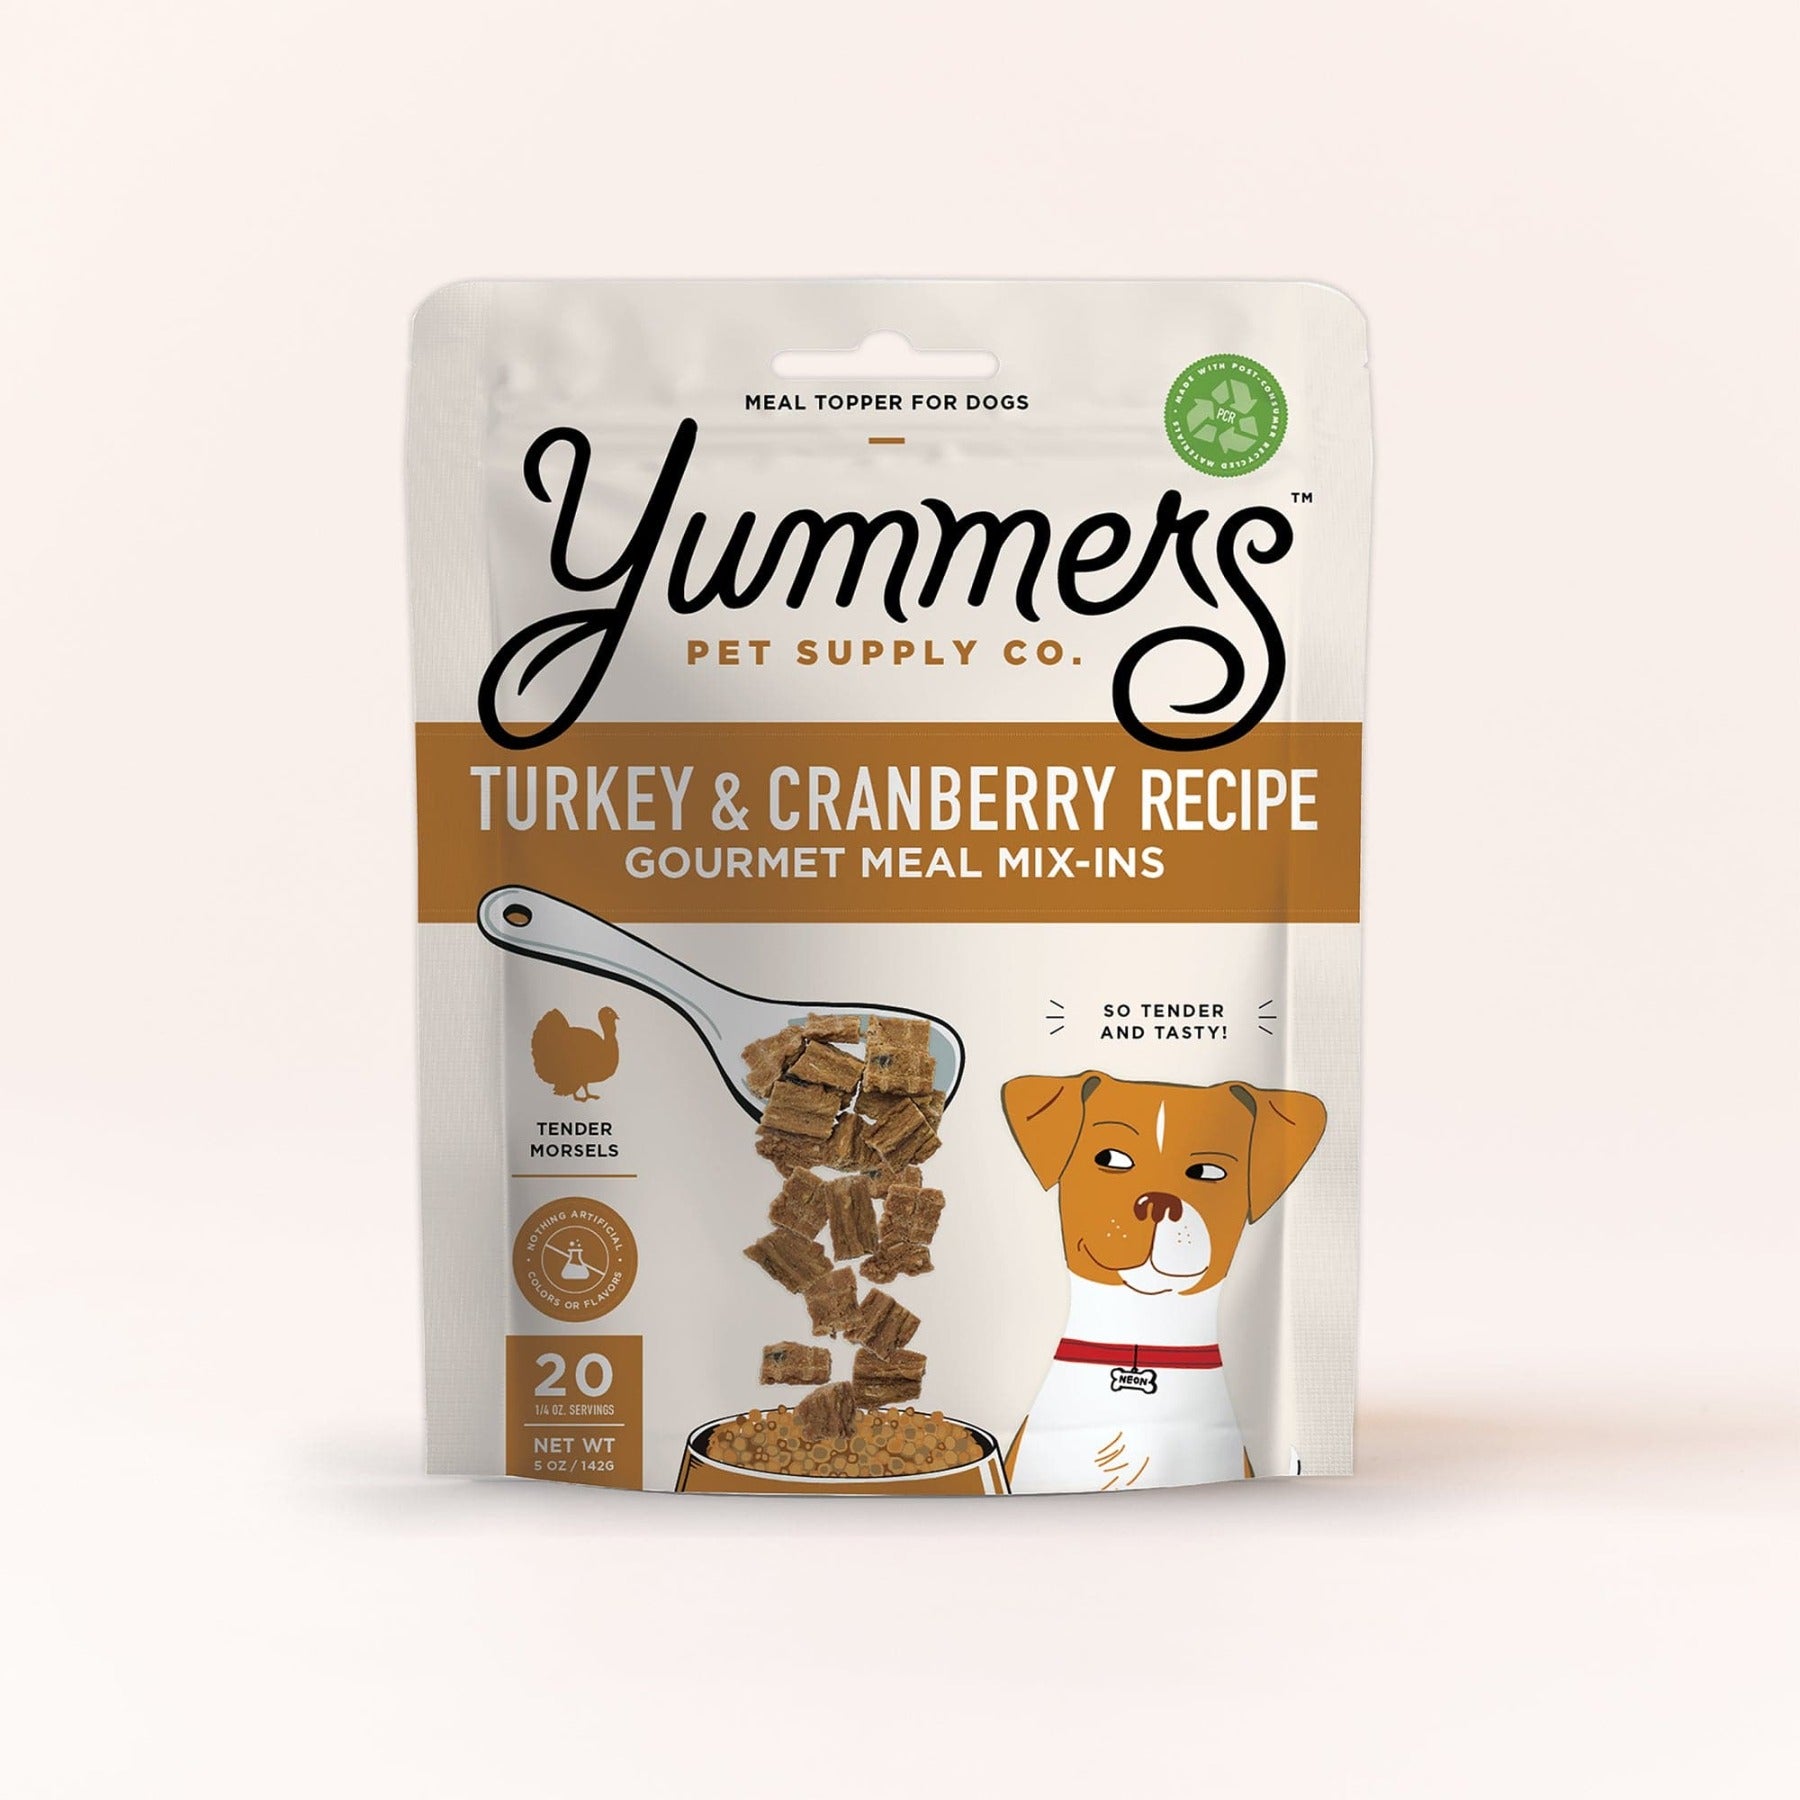 Yummers Turkey & Cranberry Mix-Ins